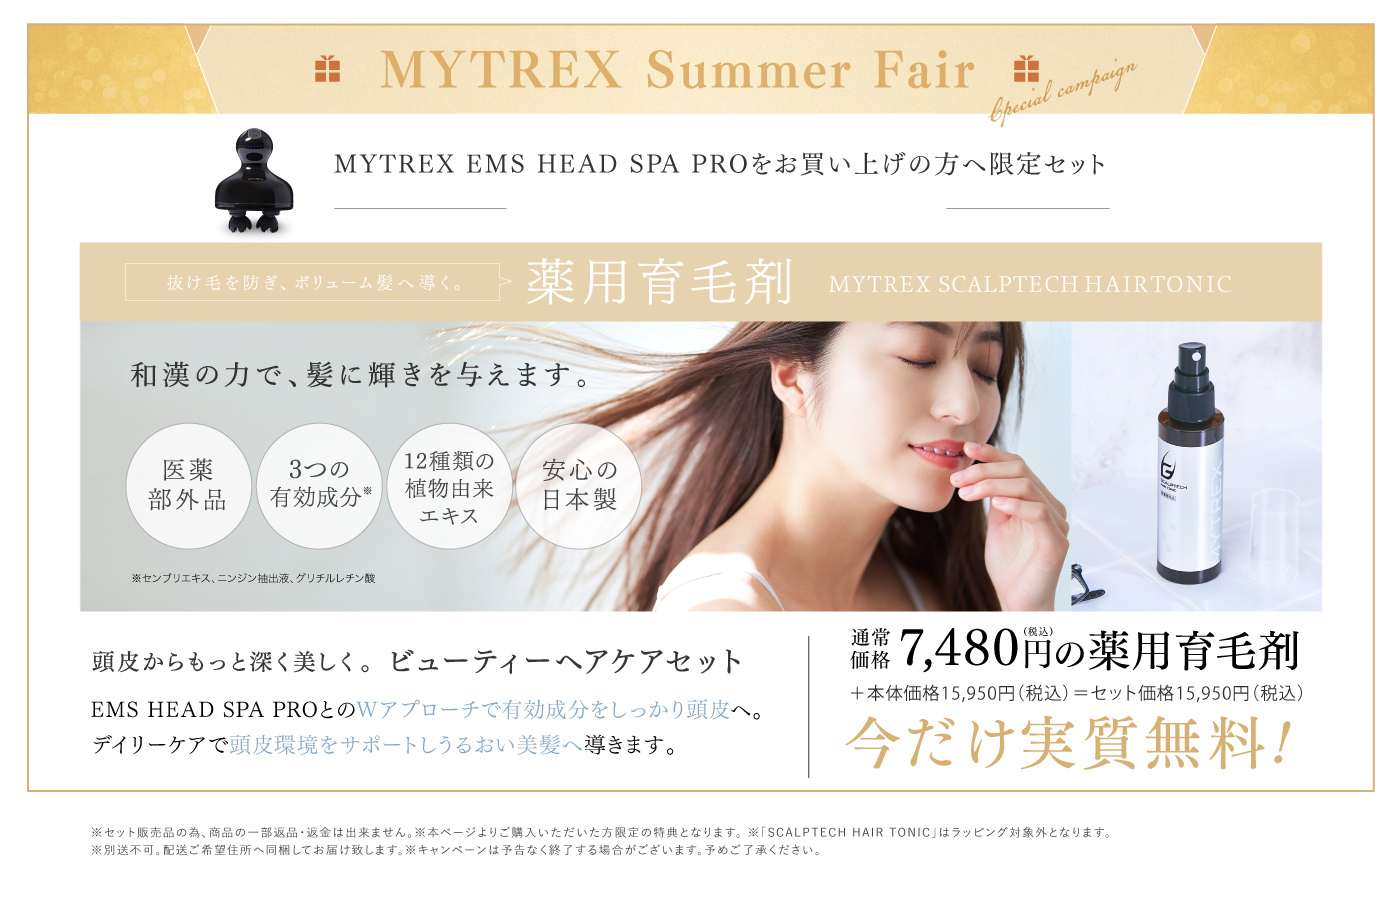 MYTREX SCALPTECH HAIR TONIC 薬用育毛剤